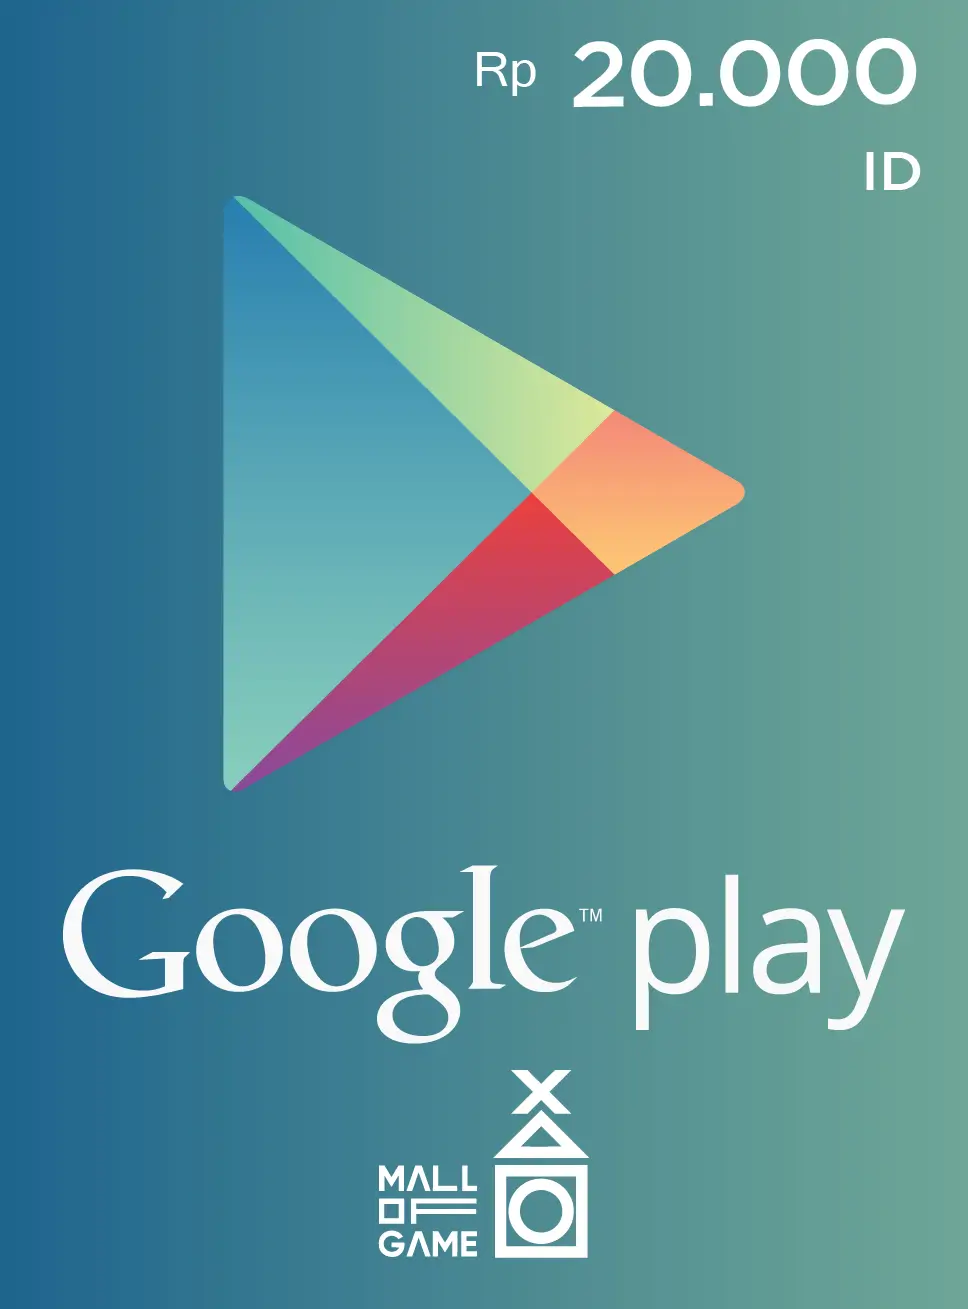 Google Play IDR20,000 Gift Card (ID)